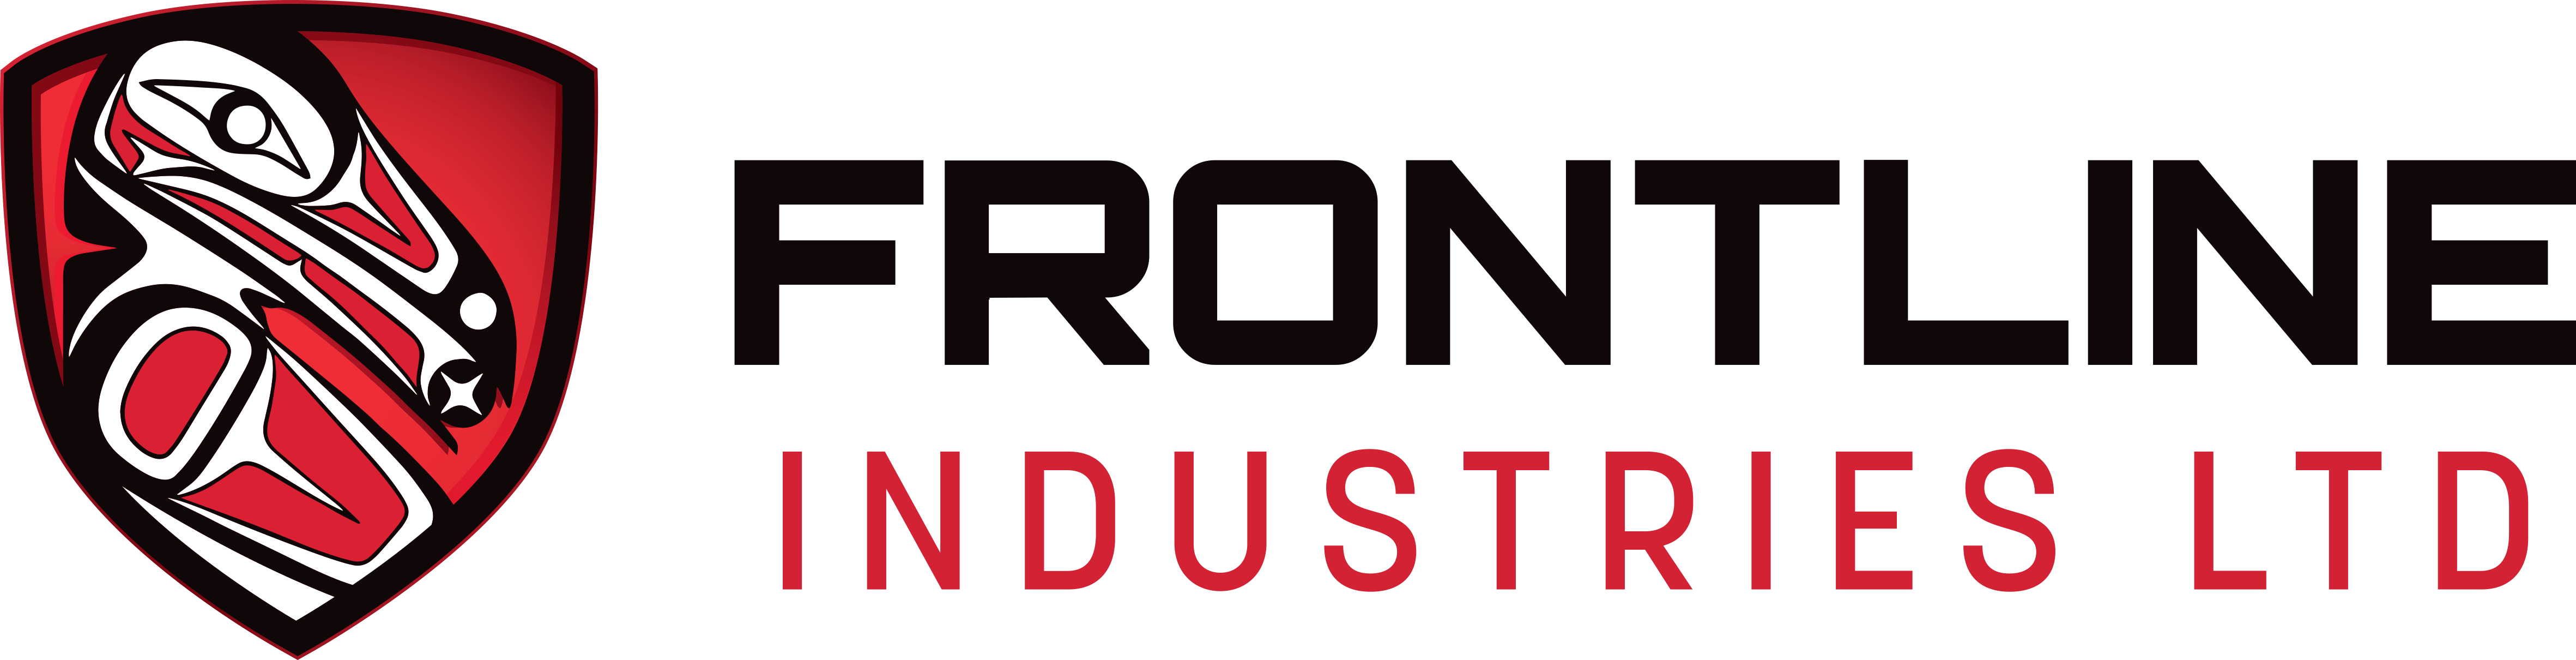 Frontline Industries Ltd. Logotype